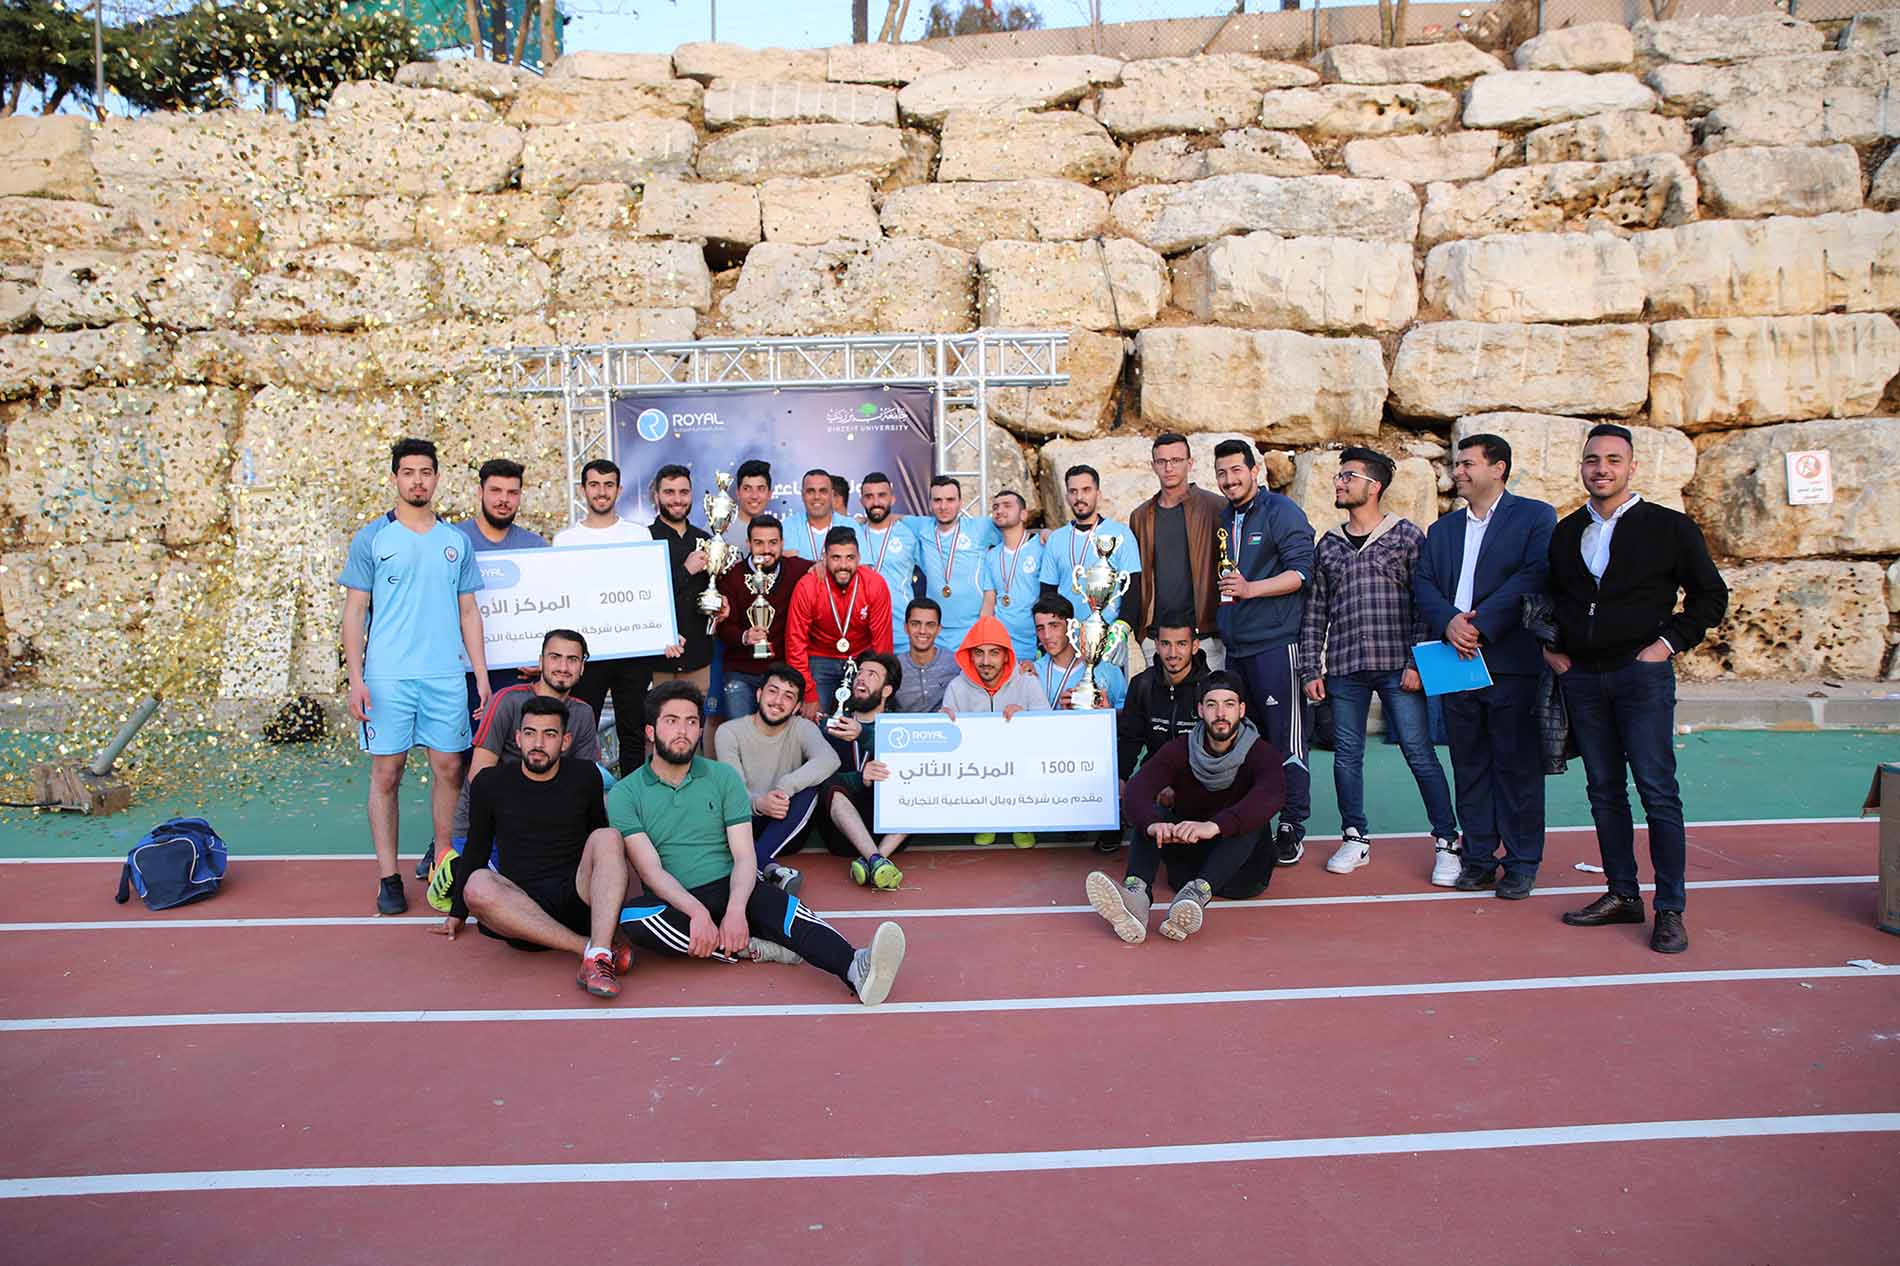 Royal sponsors the engineering engineering day at Birzeit University